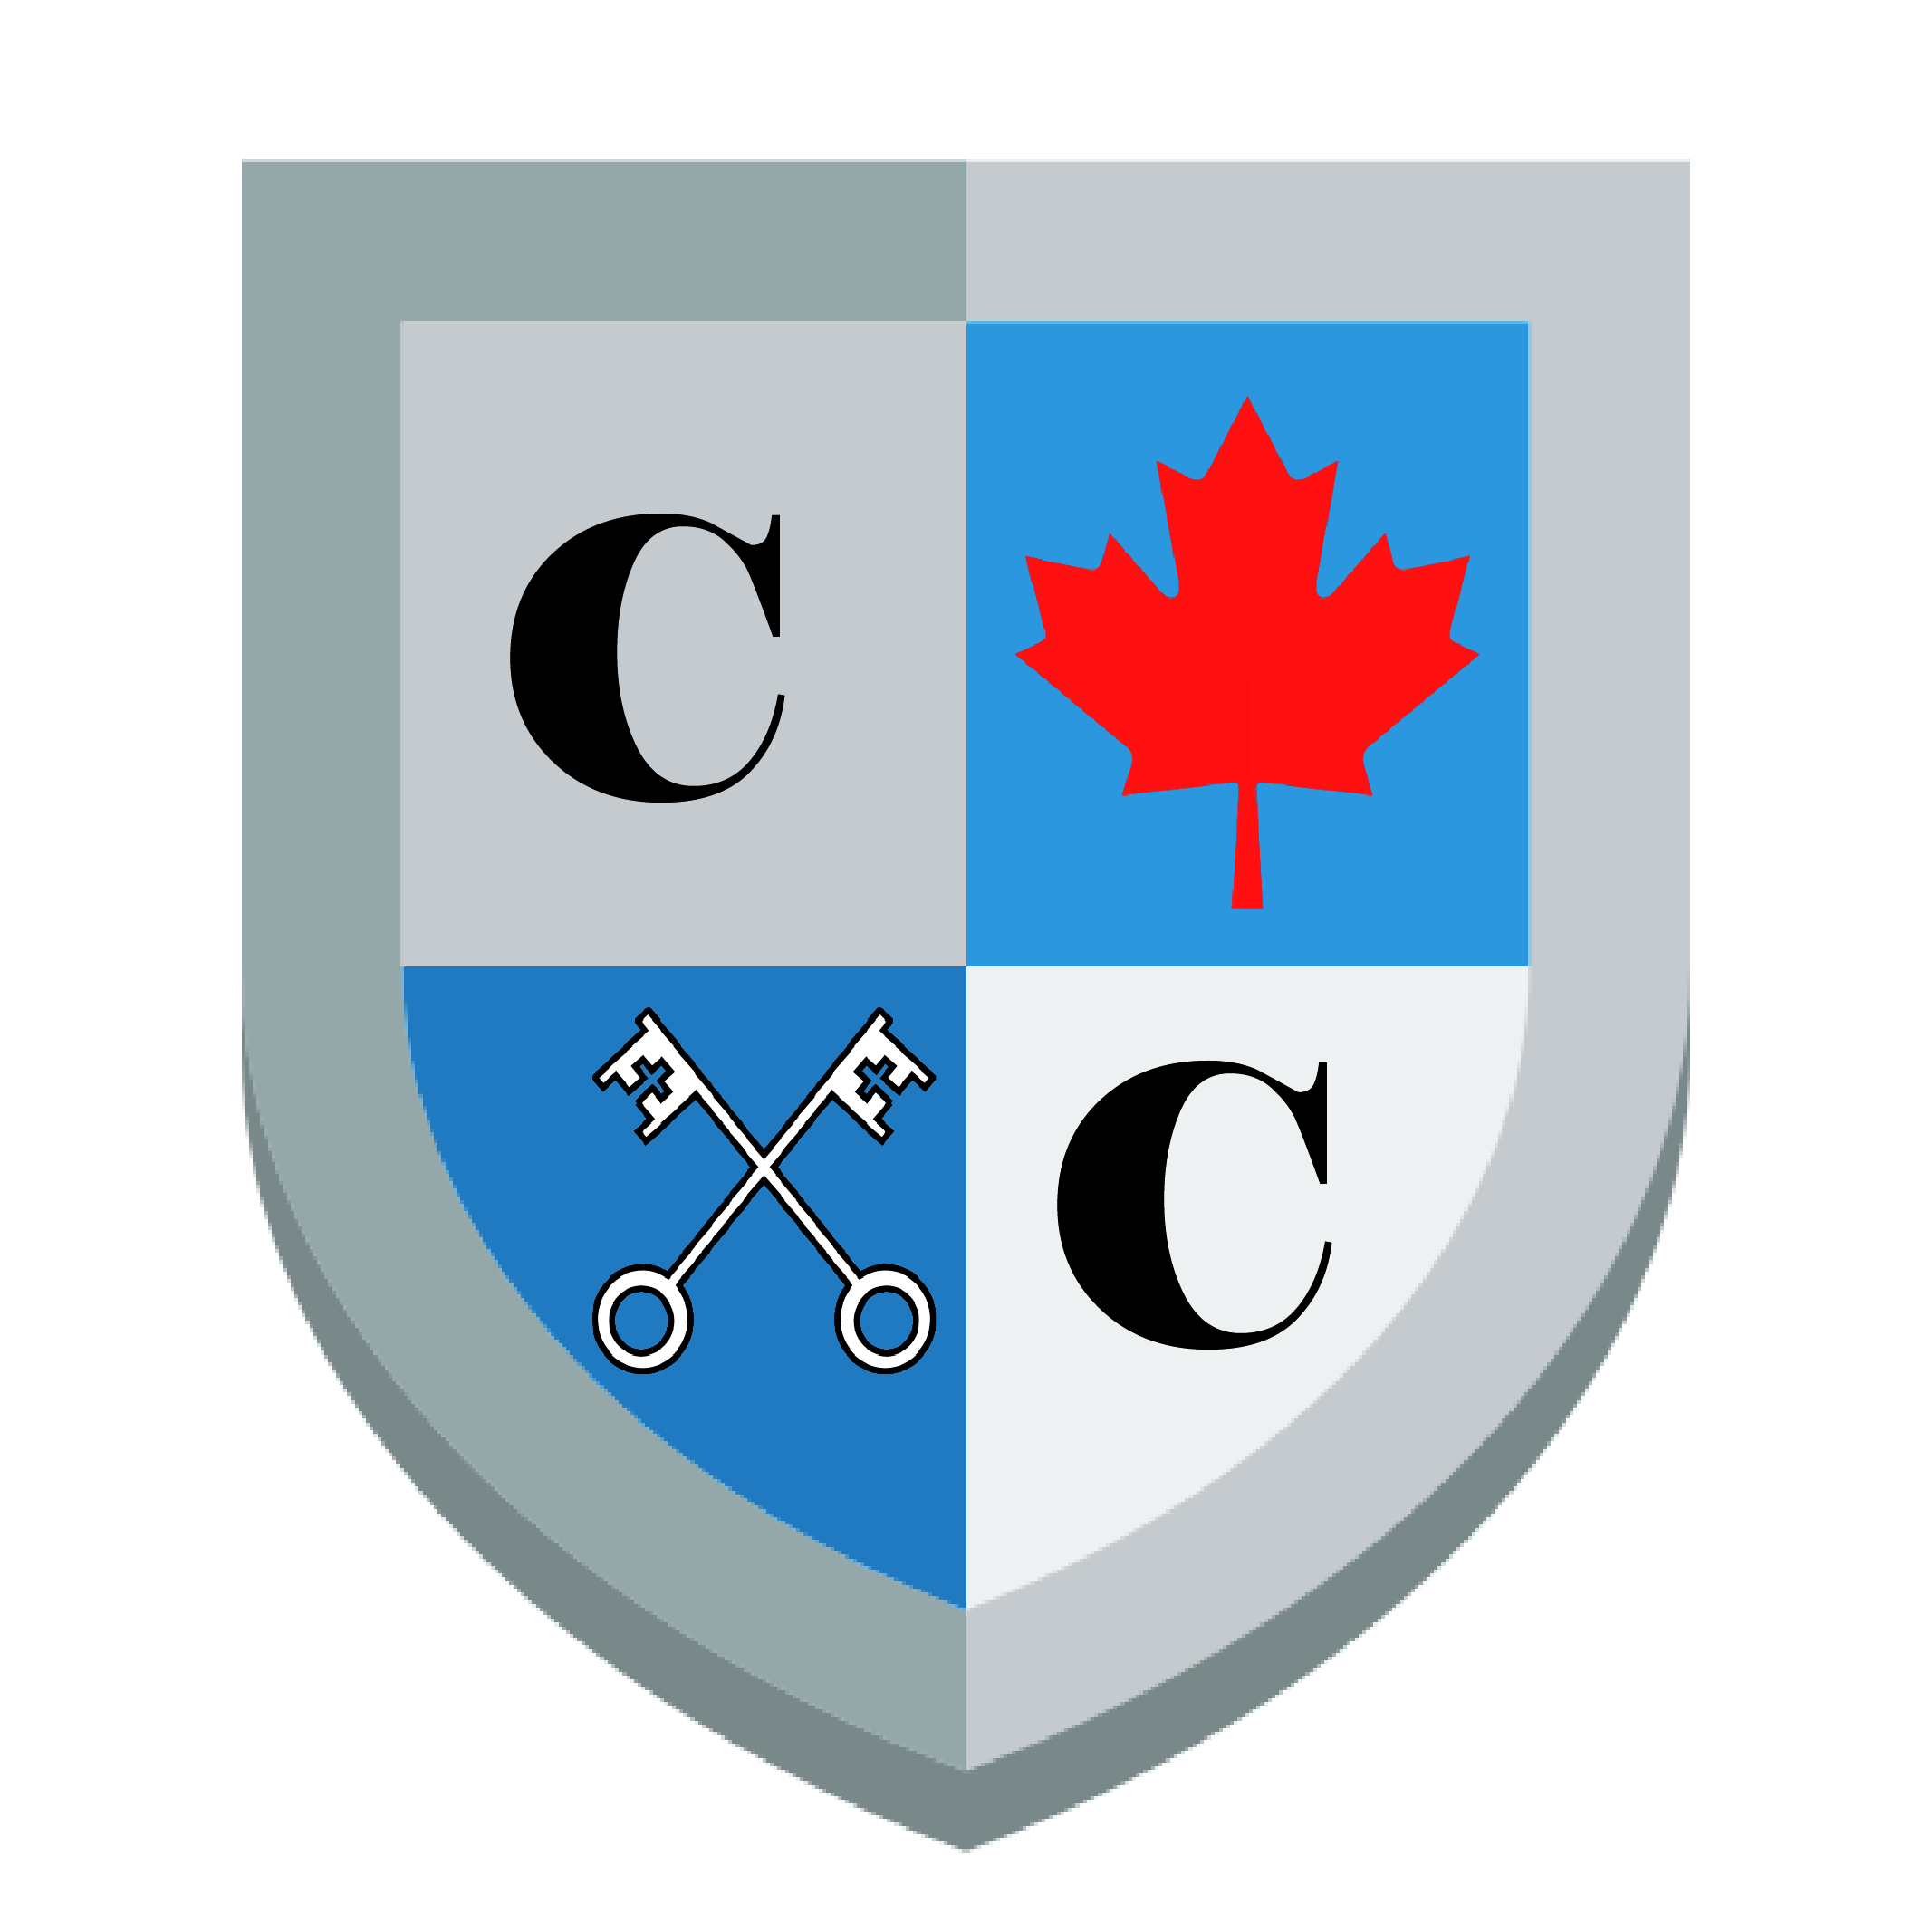 College of Canada